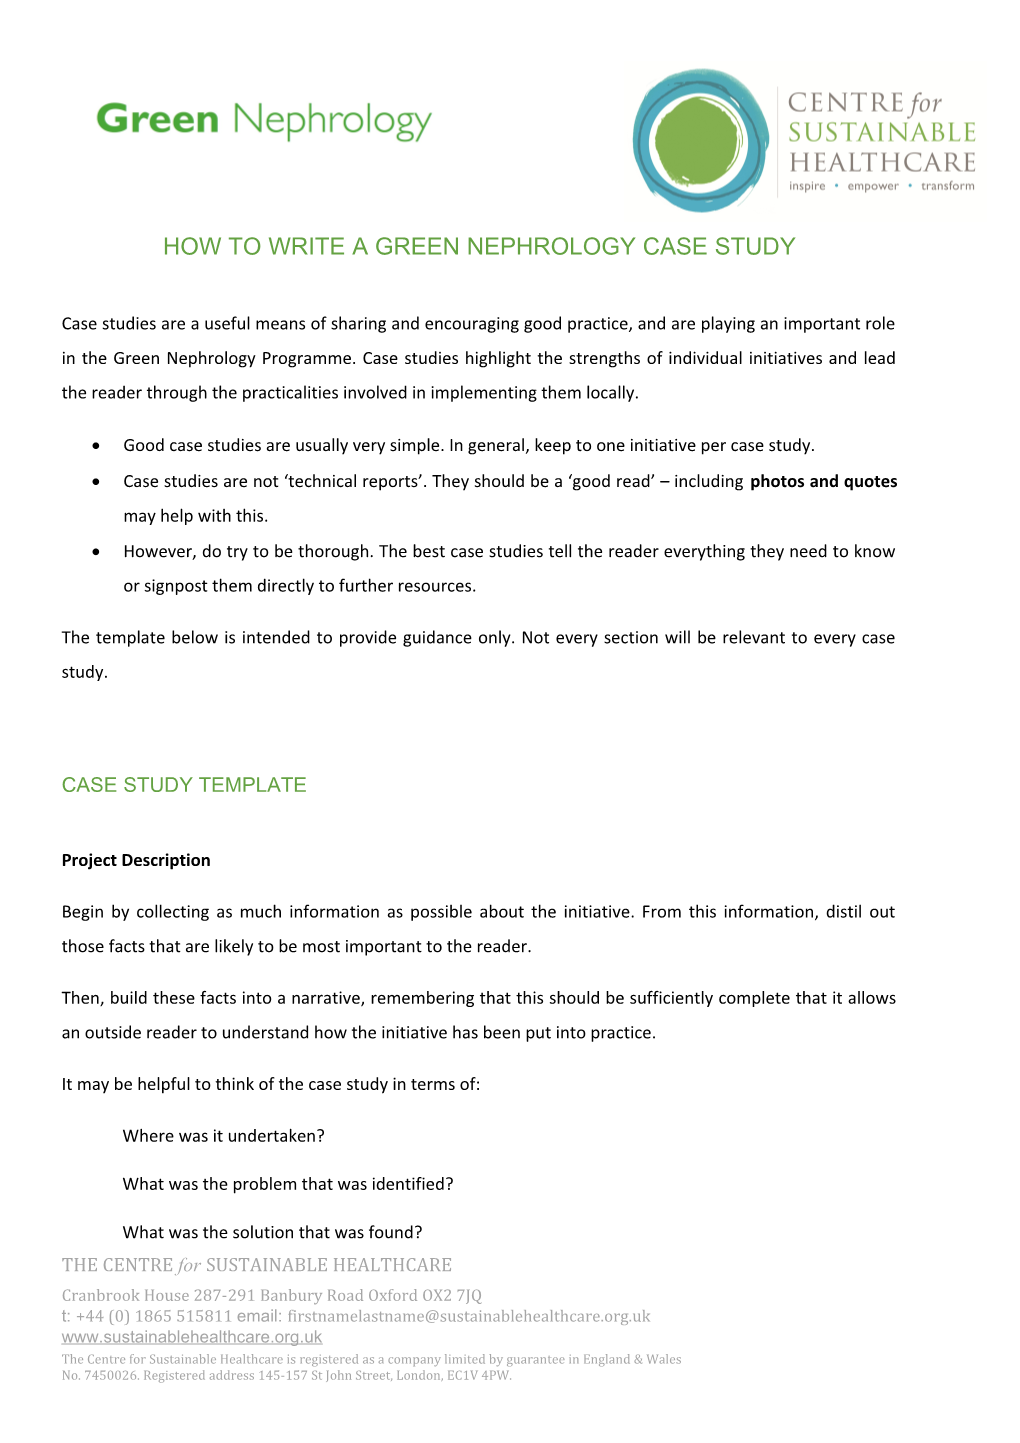 How to Write a Green Nephrology Case Study